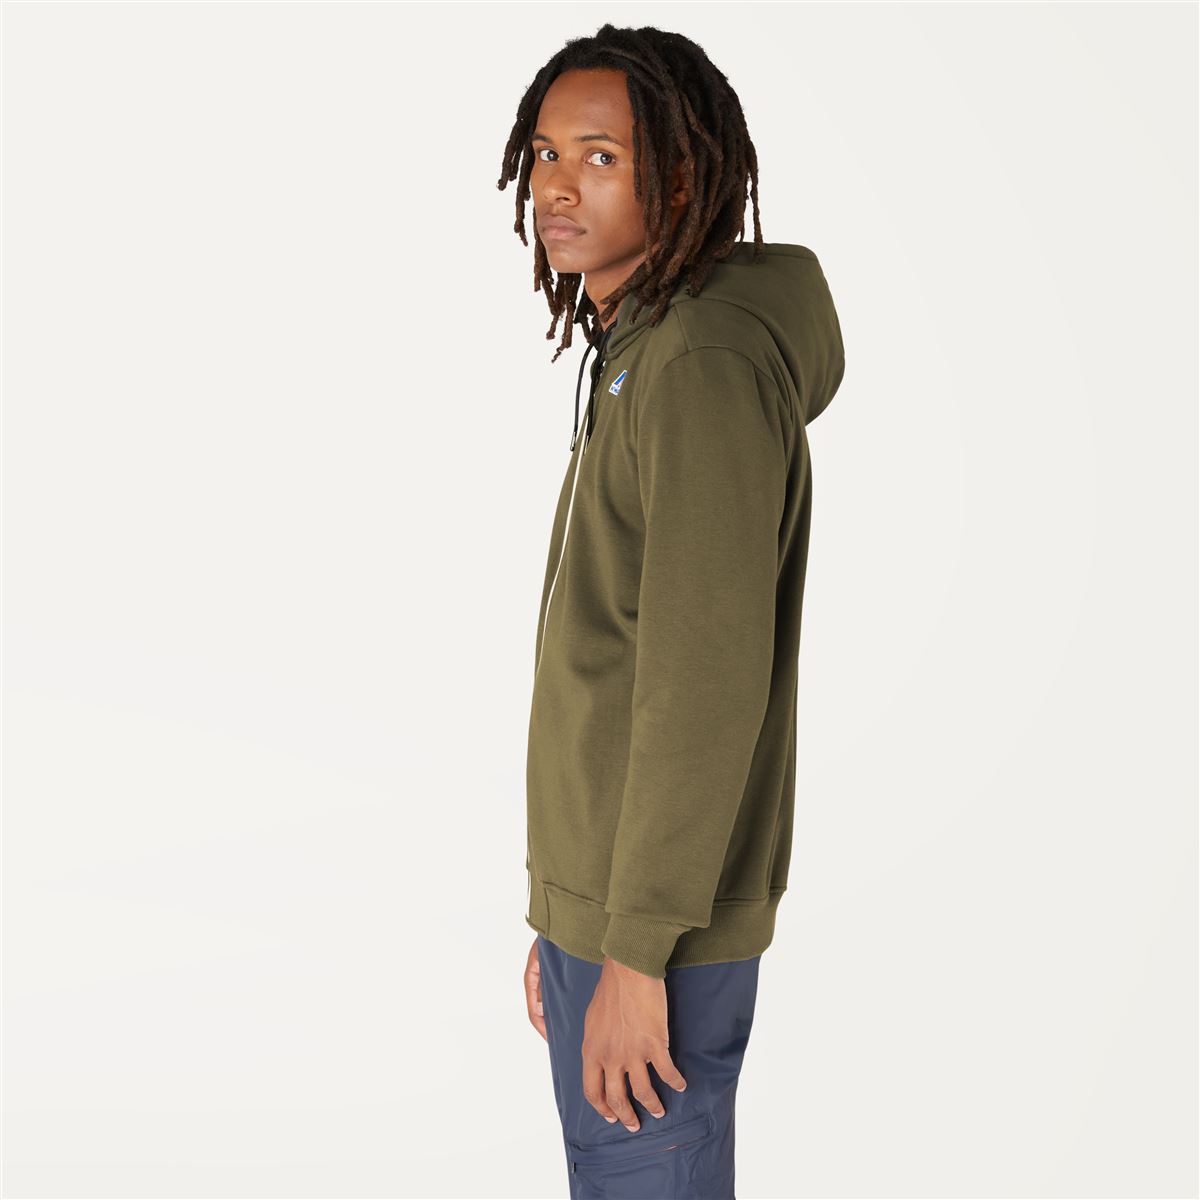 Arnel - Unisex Hooded Fleece Sweatshirt in Green Blackish